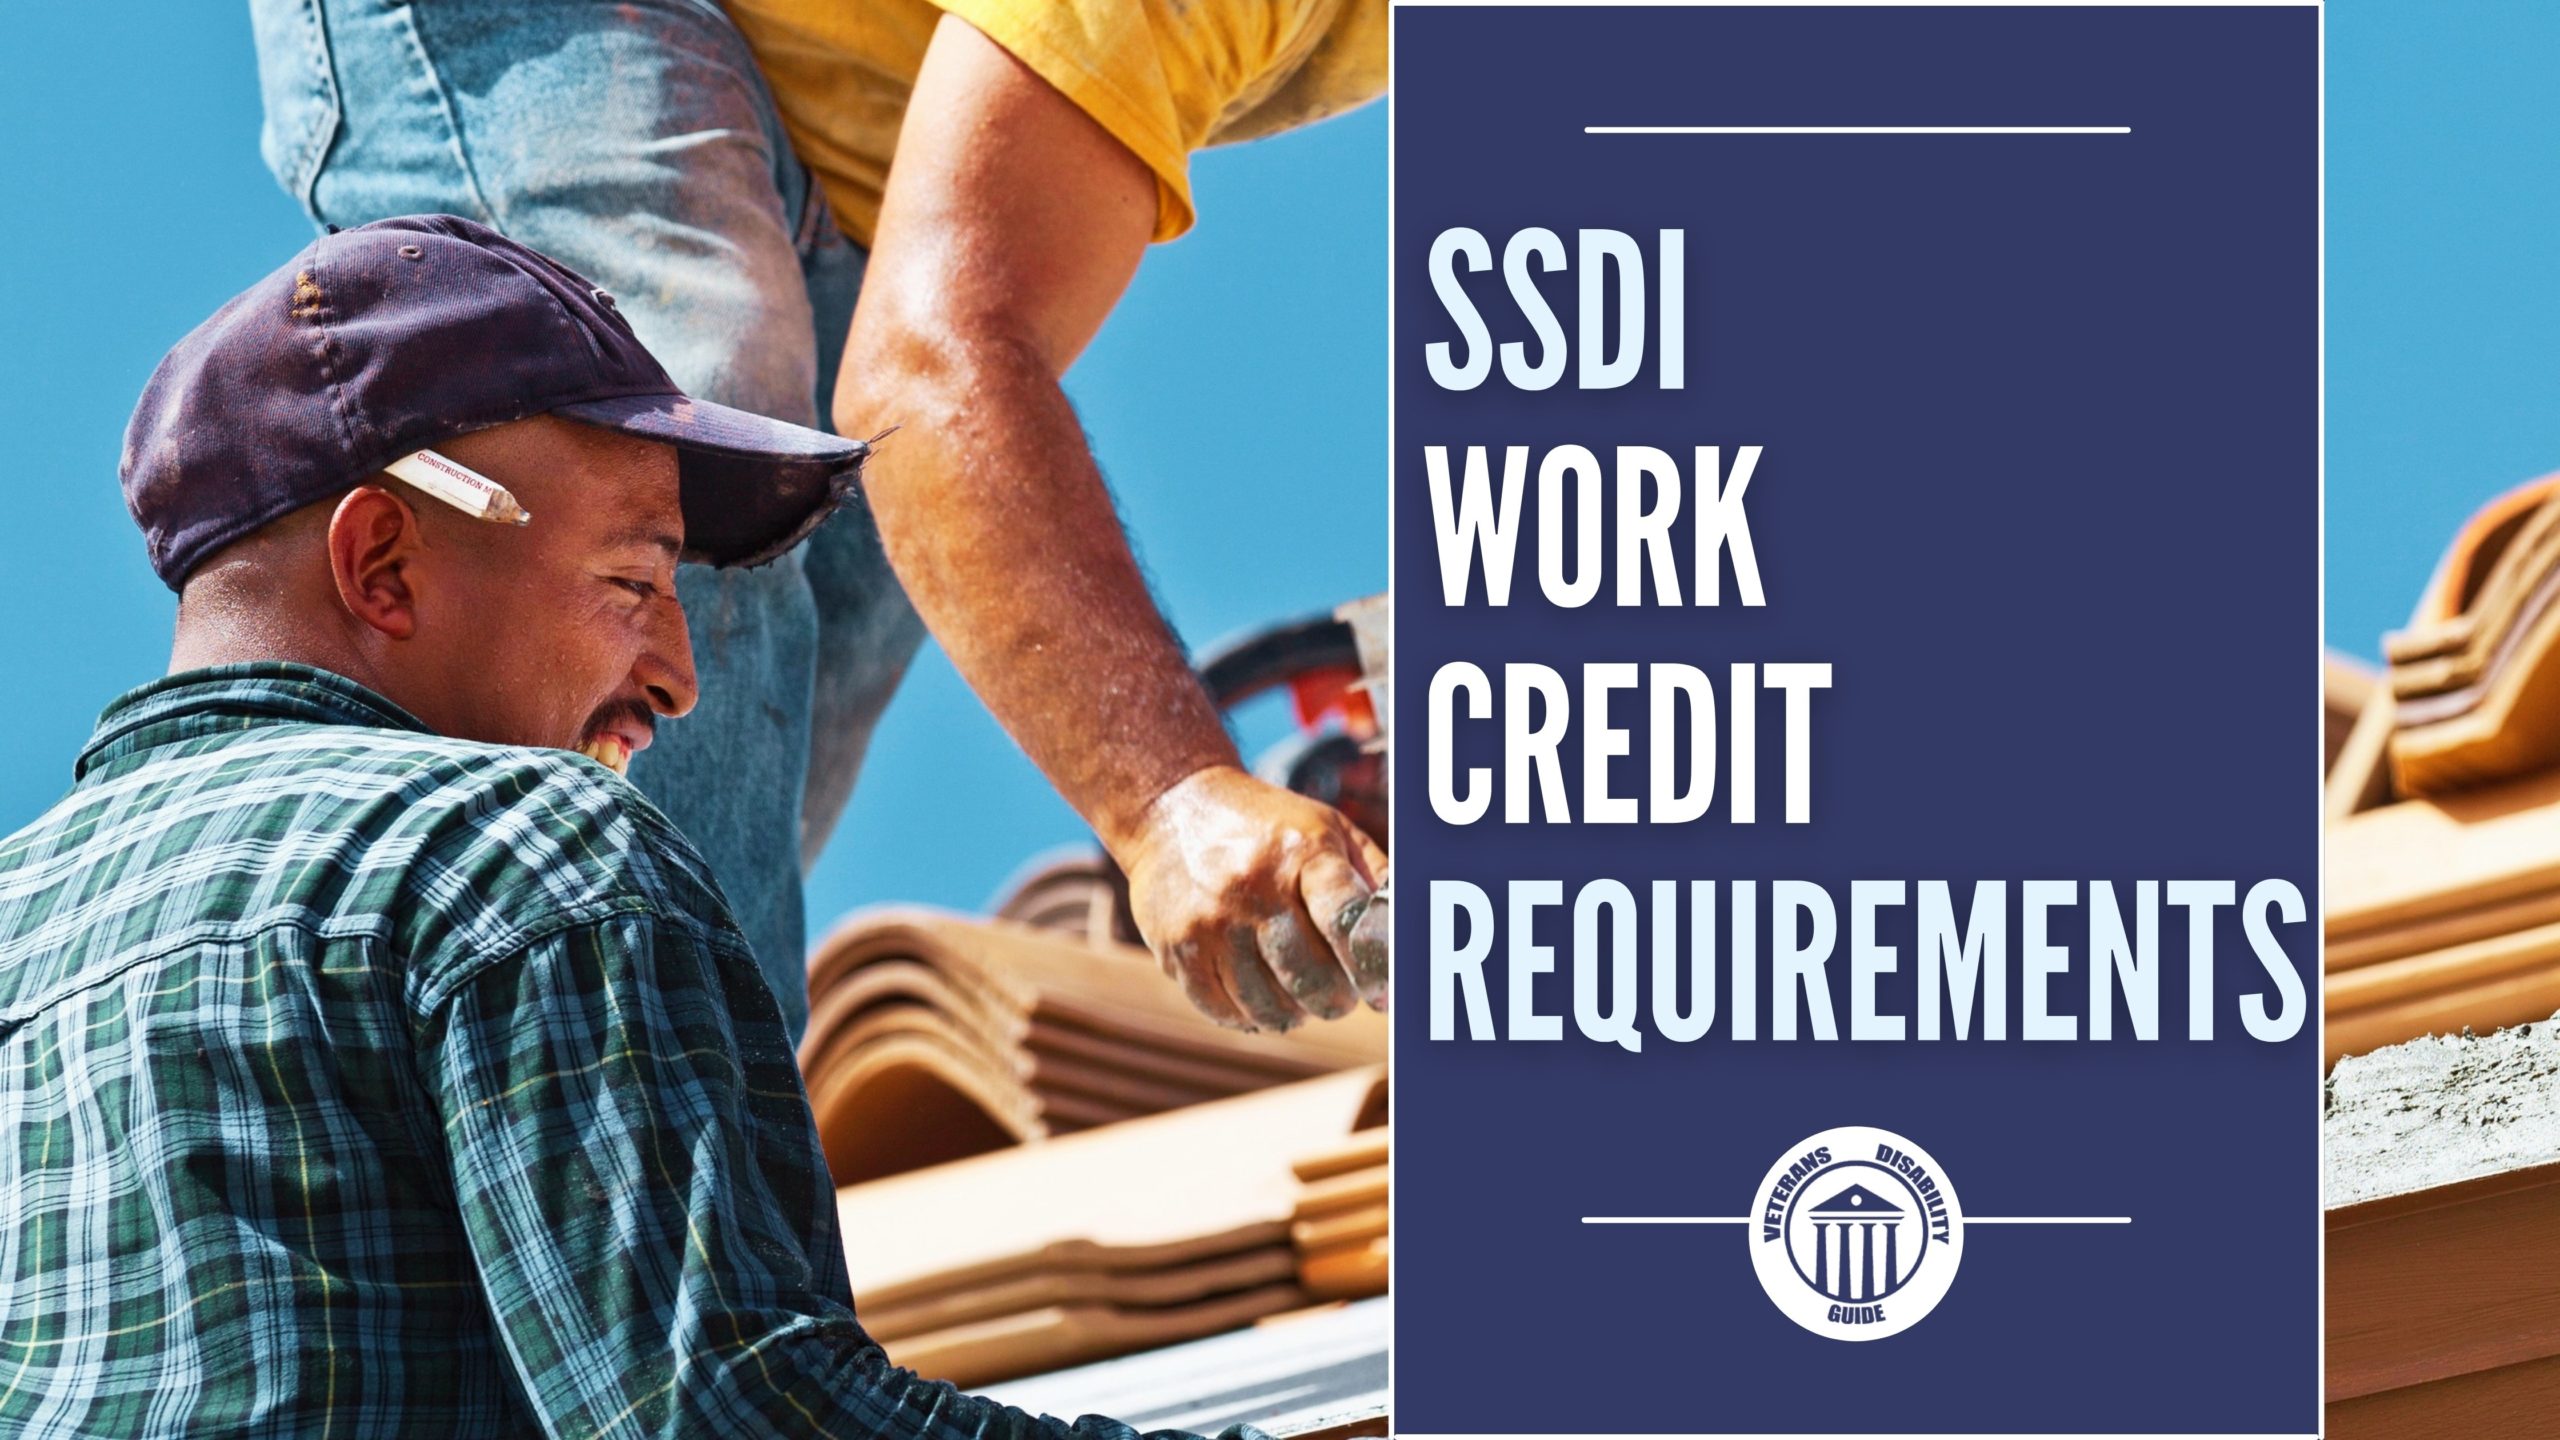 SSDI Work Credit Requirements blog header image